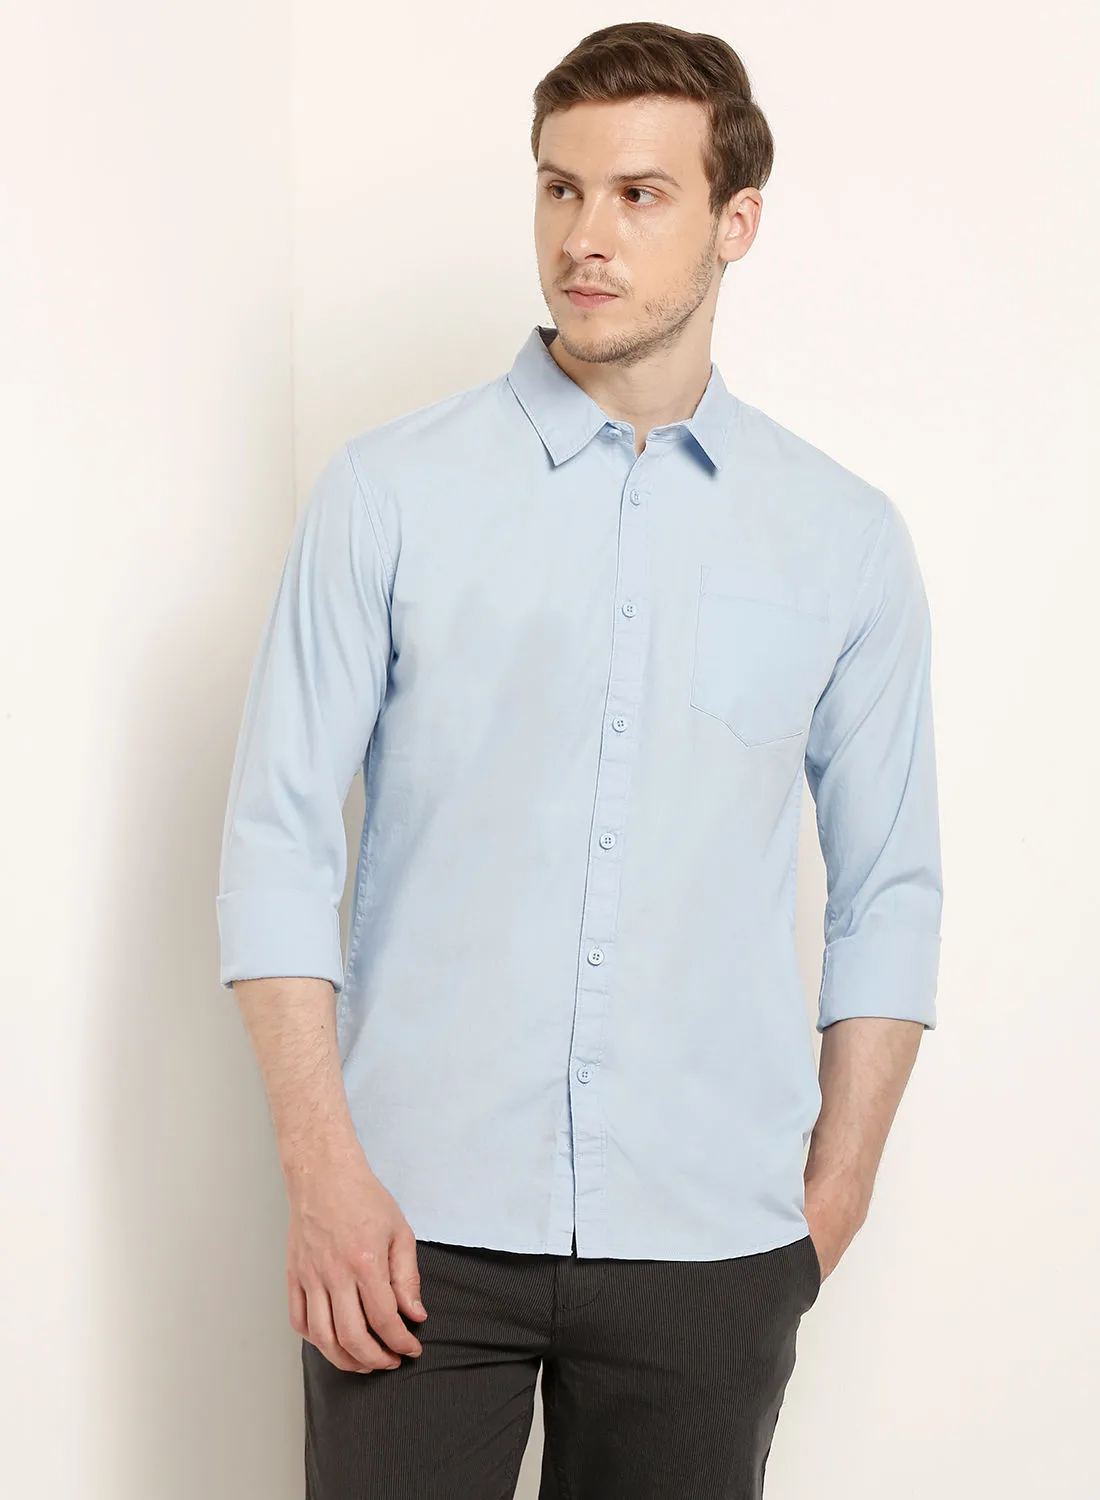 ABOF Casual Comfortable Regular Fit Collared Neck Plain Shirt Light China Blue